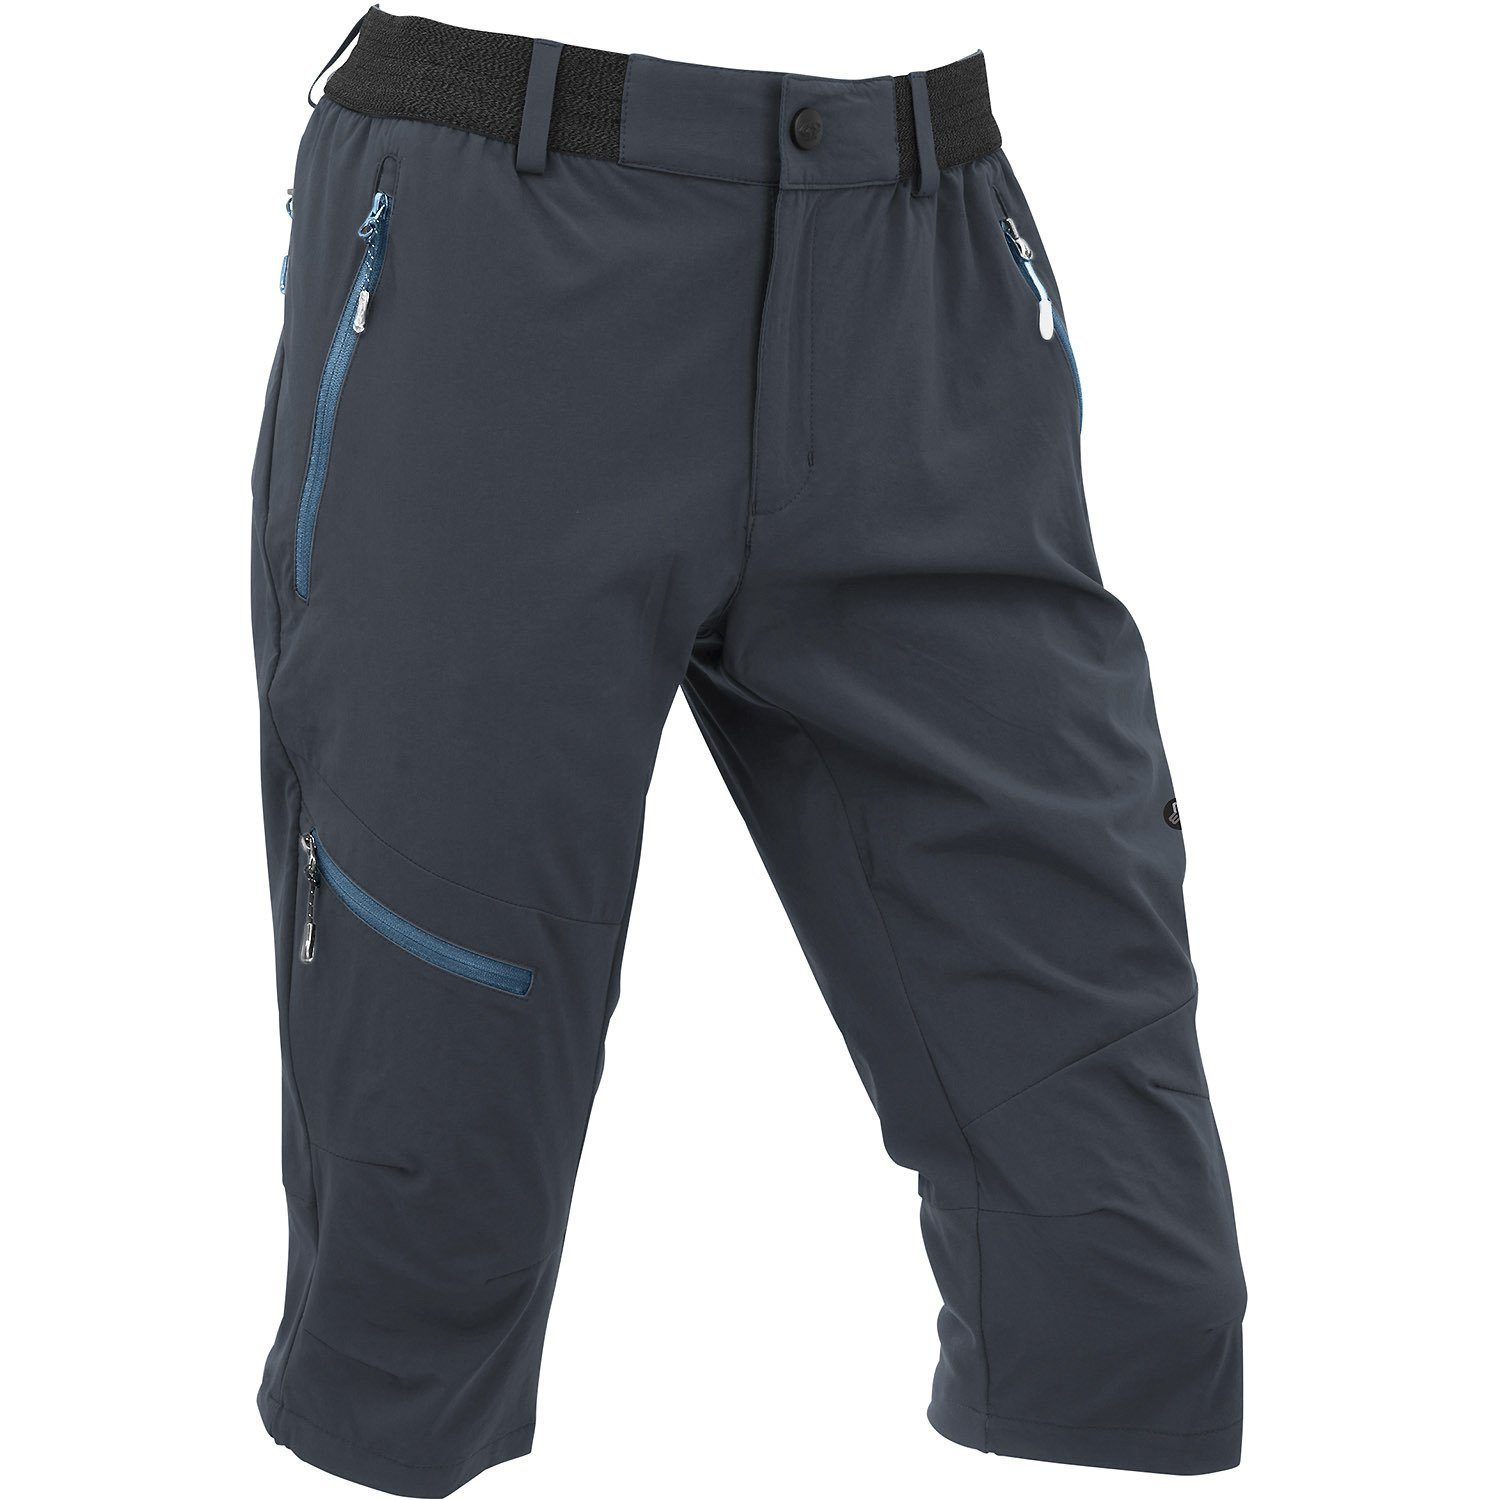 Maul Sport® Funktionsshorts Berghose 3/4 Lehn Ultralight Marine | Shorts